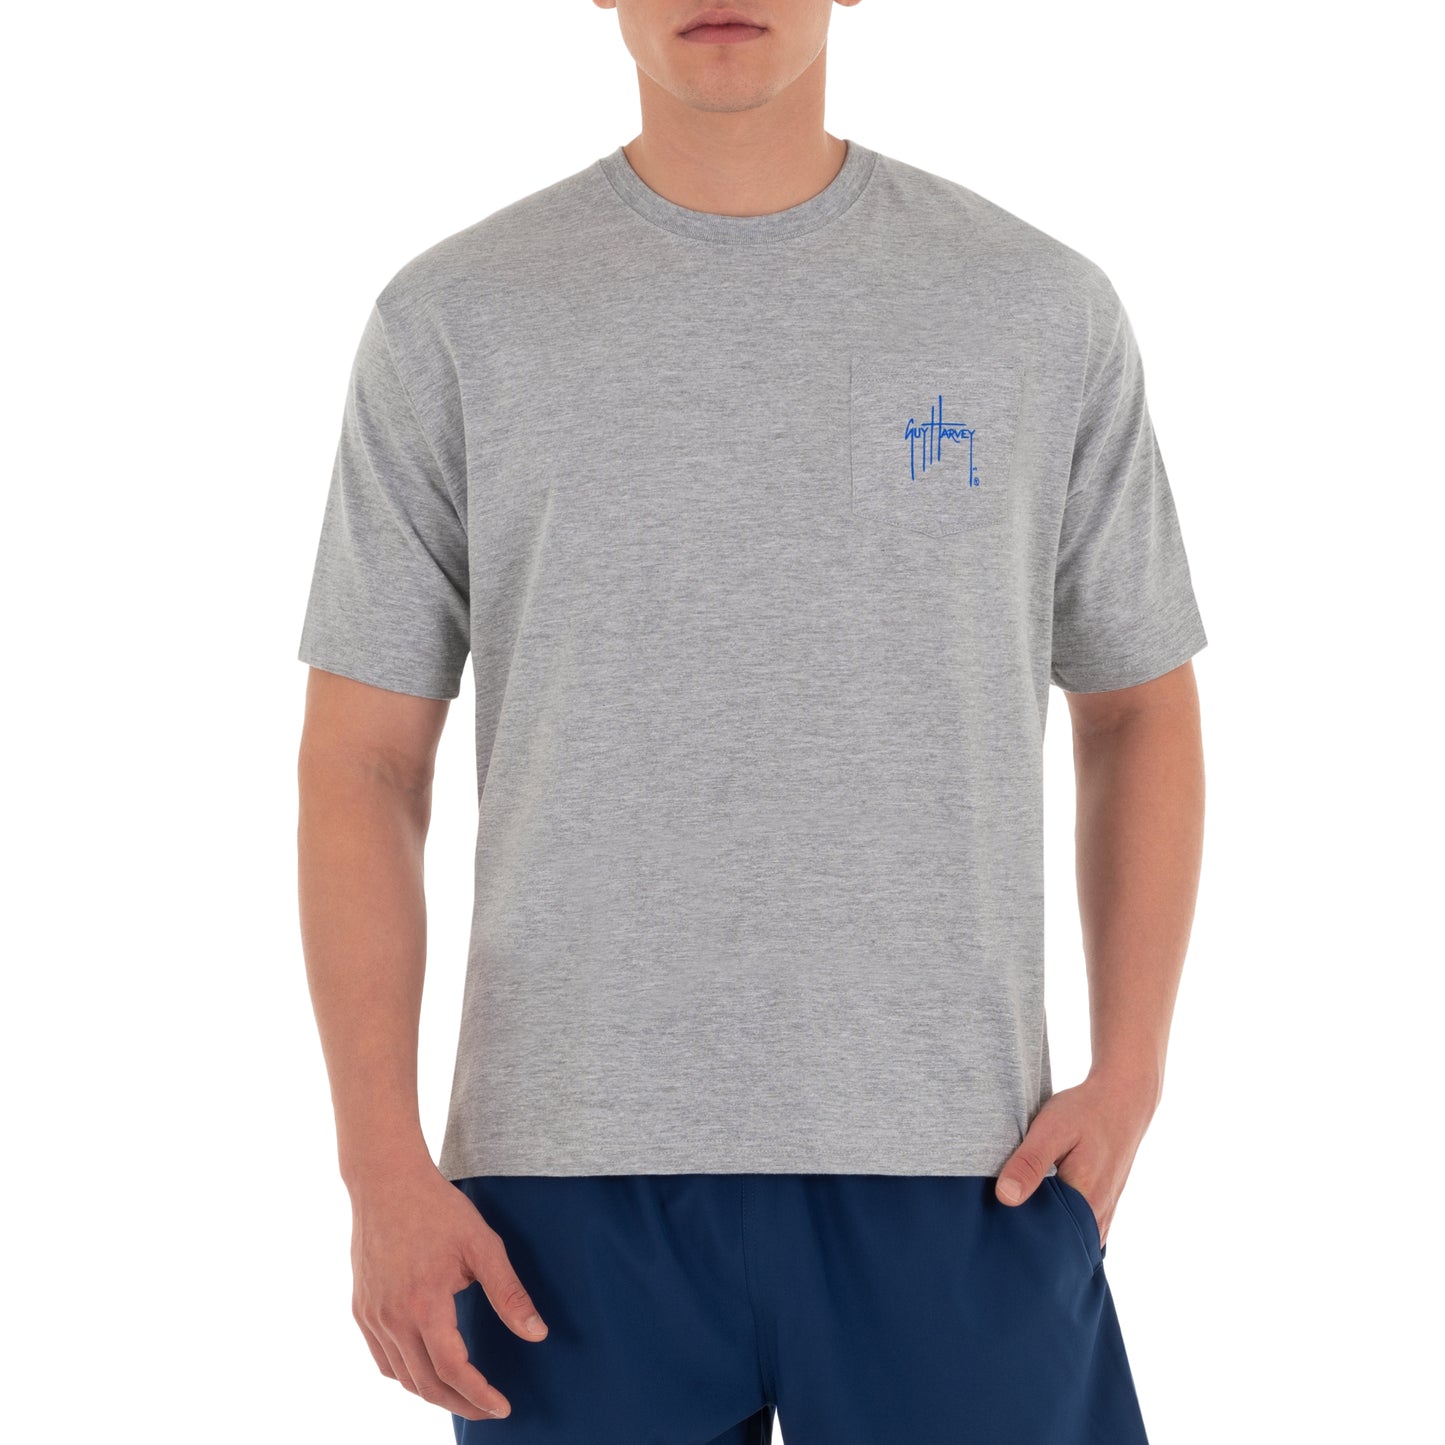 Men's Bonefish Catch II Short Sleeve Pocket Grey T-Shirt View 2